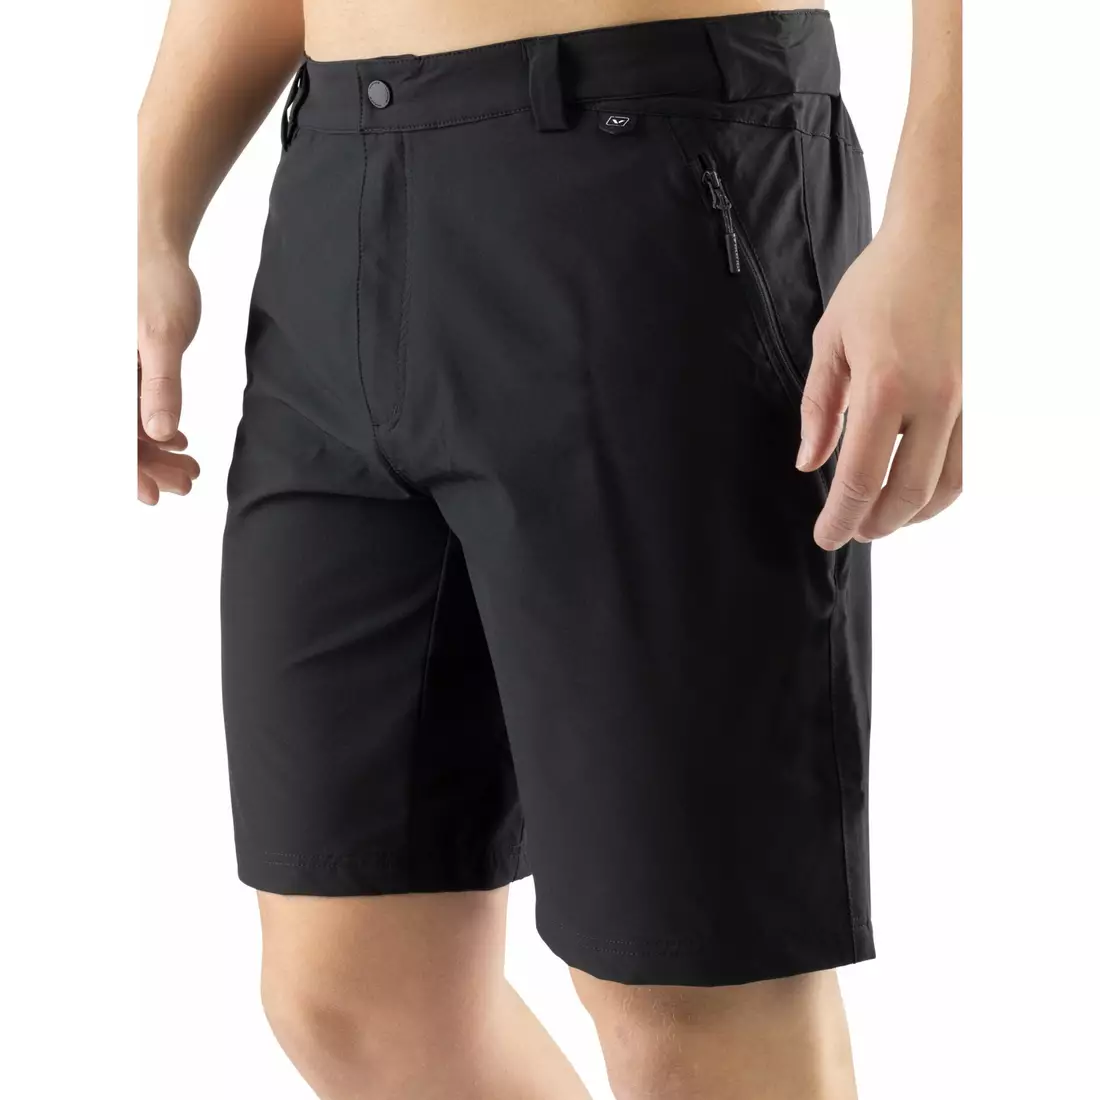 VIKING Men's sports and trekking shorts Expander 800/24/2309/0900 black